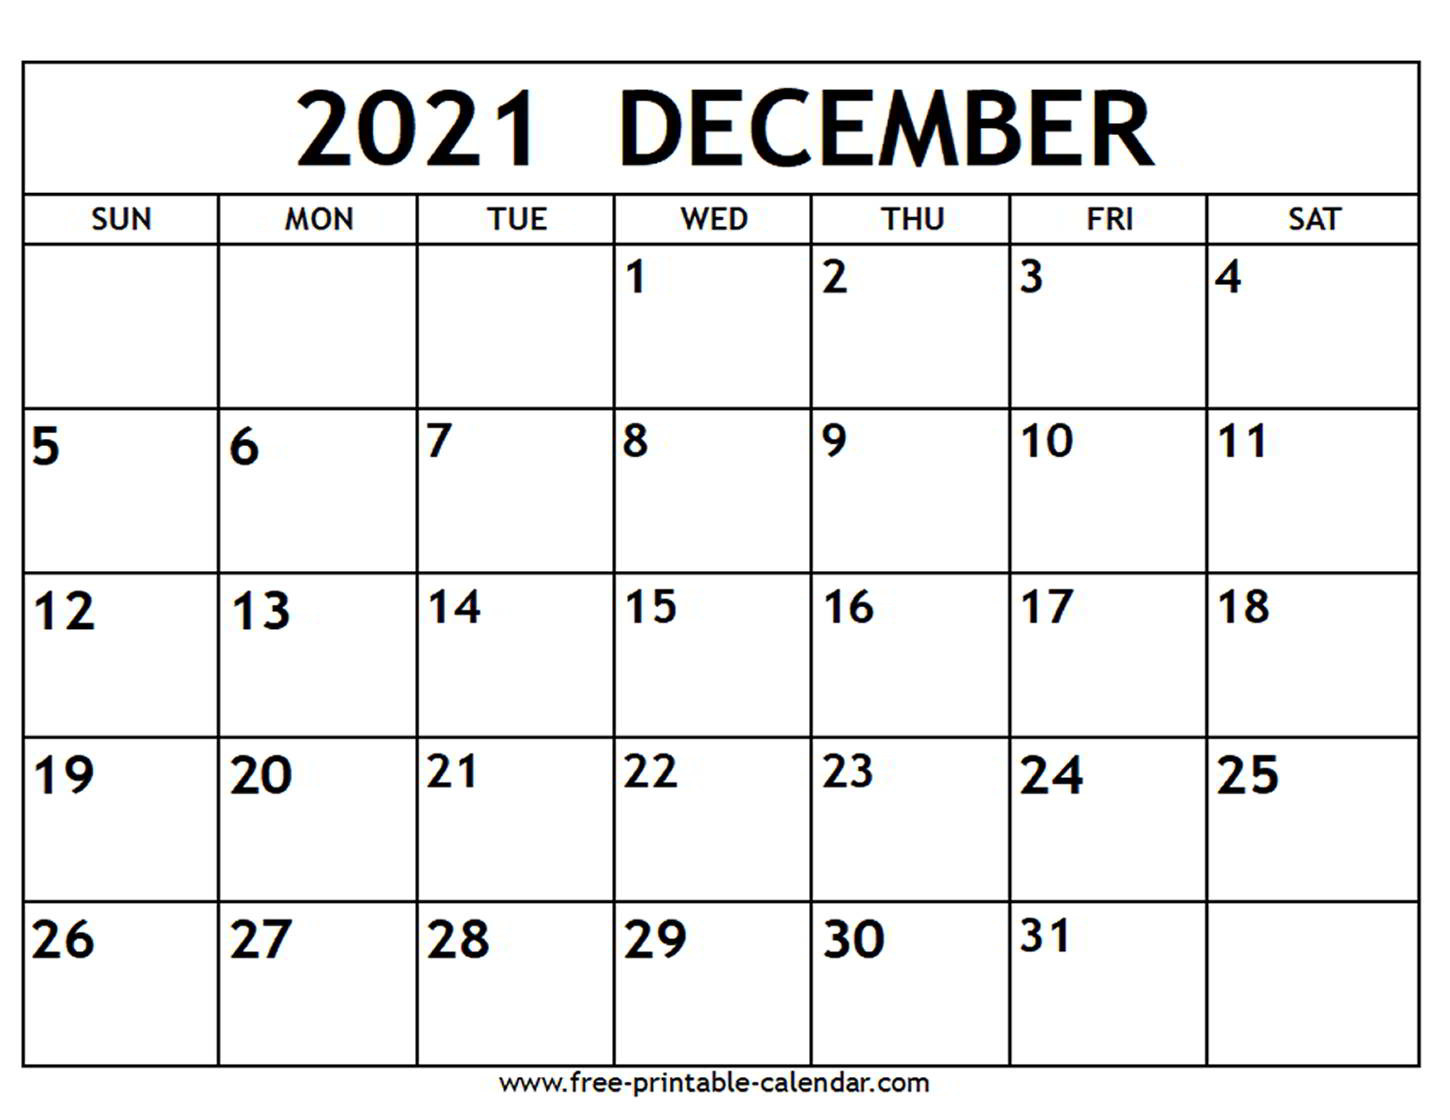 2021 Calendar Templates Editable By Word - 2021 Calendar-2021 Calendar Printable Free